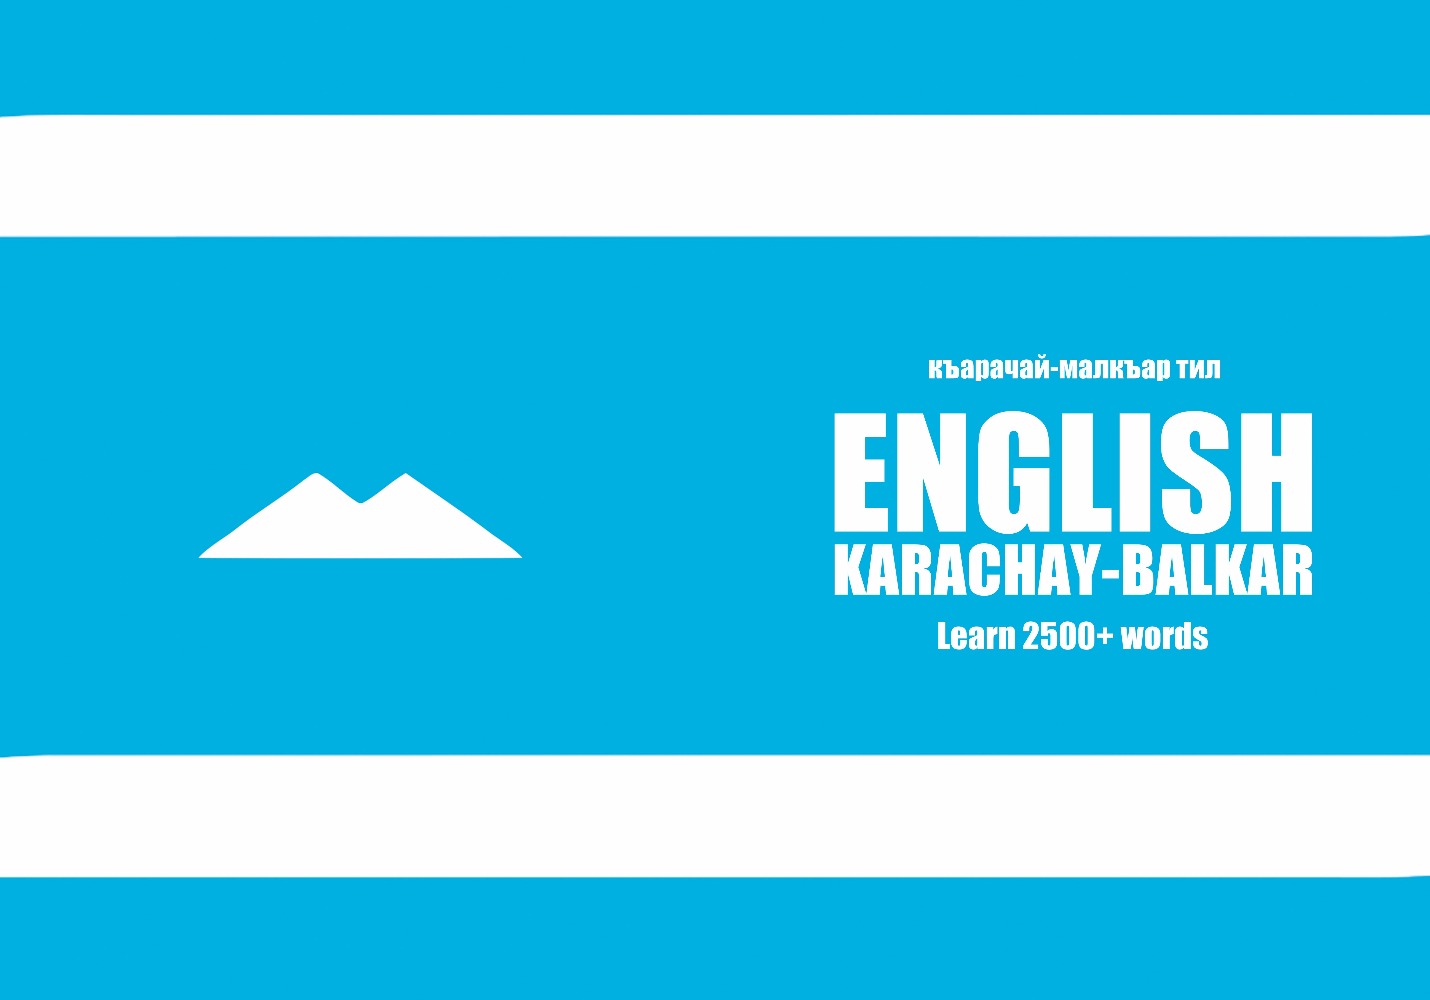 Karachay-Balkar language learning notebook cover